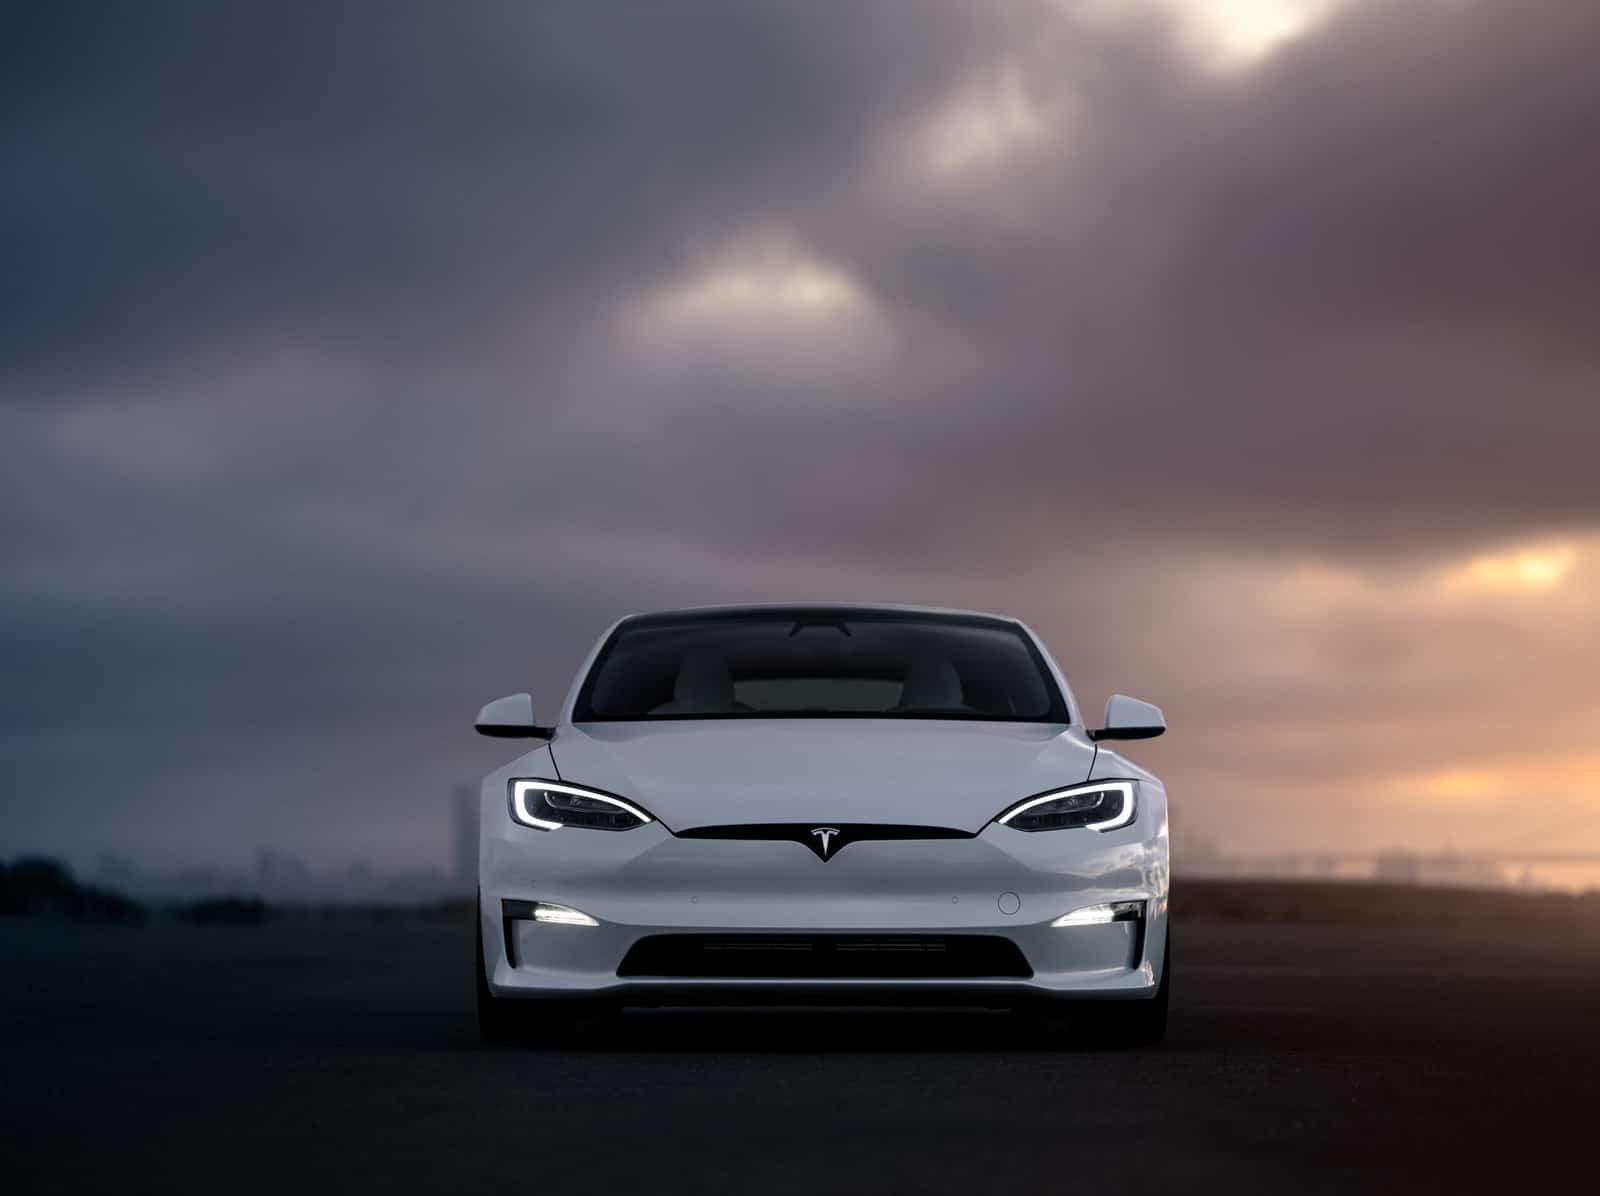 Tesla Model S cloudy day